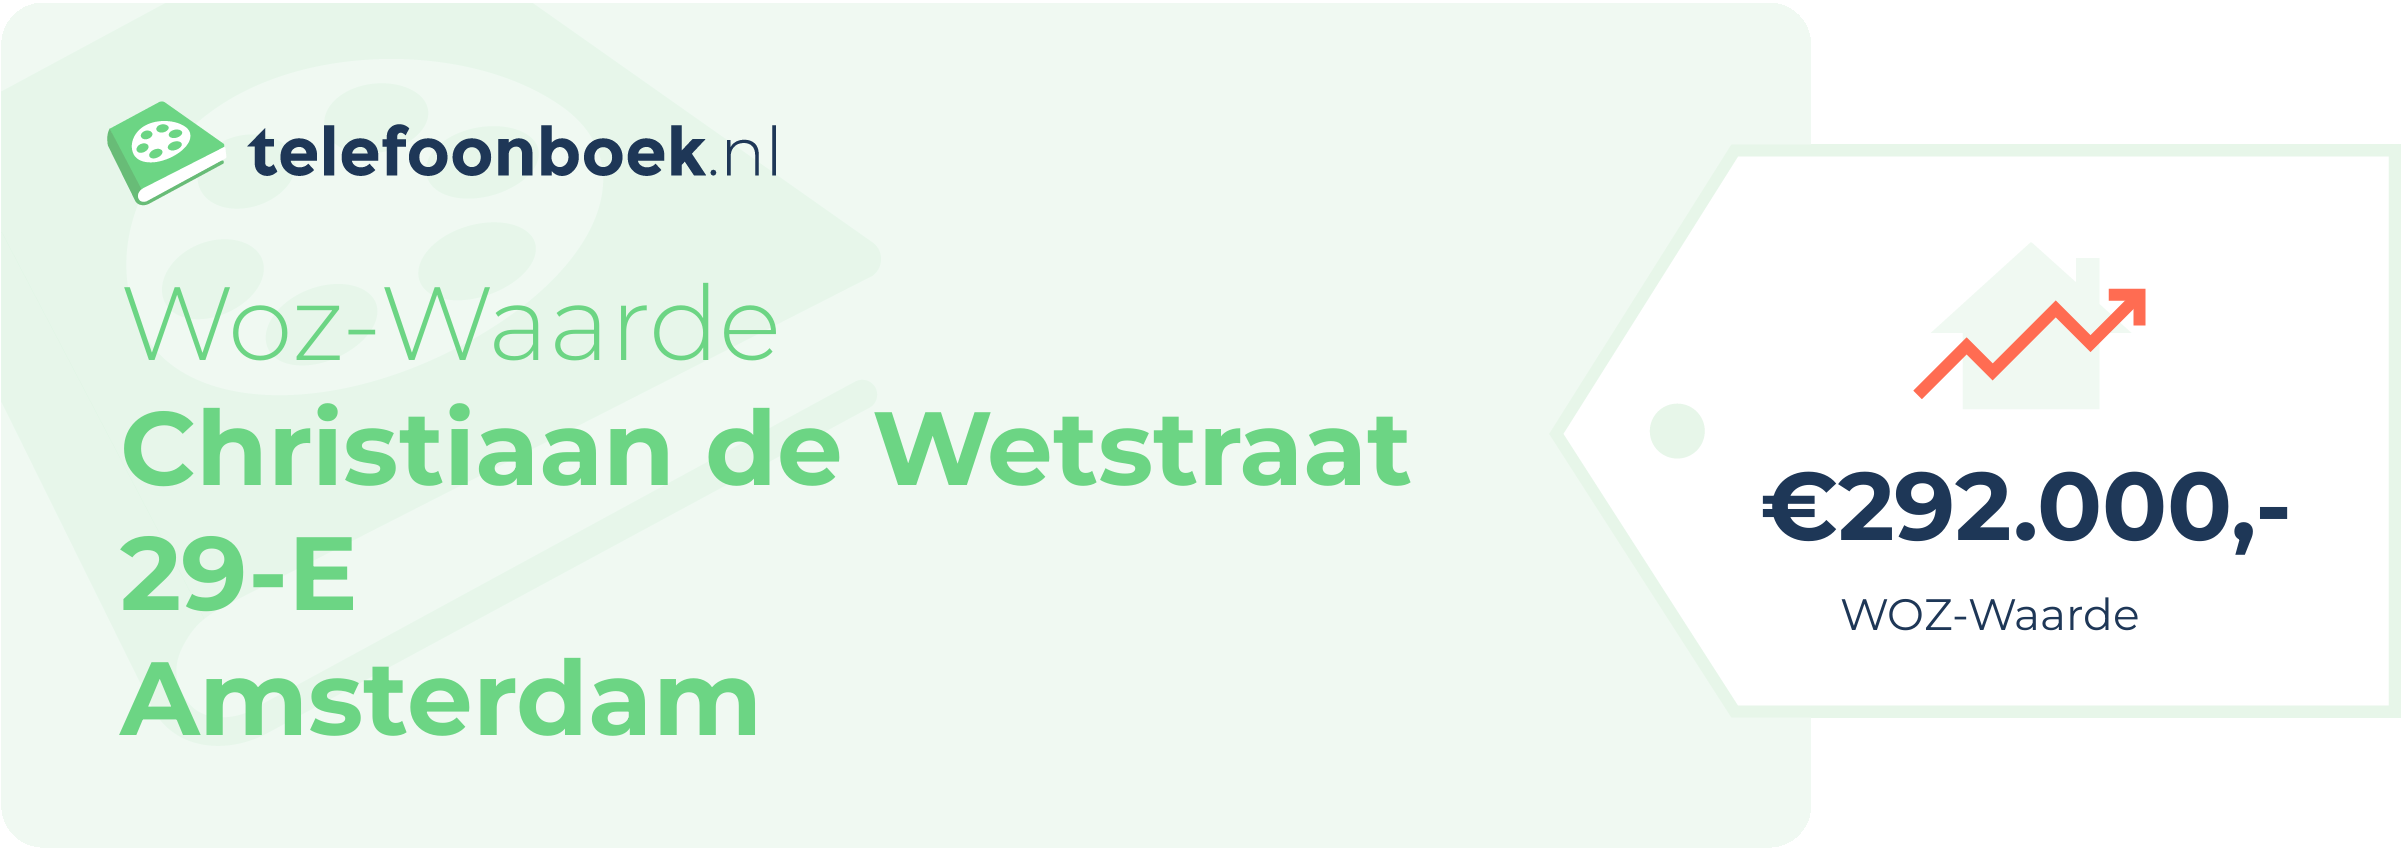 WOZ-waarde Christiaan De Wetstraat 29-E Amsterdam